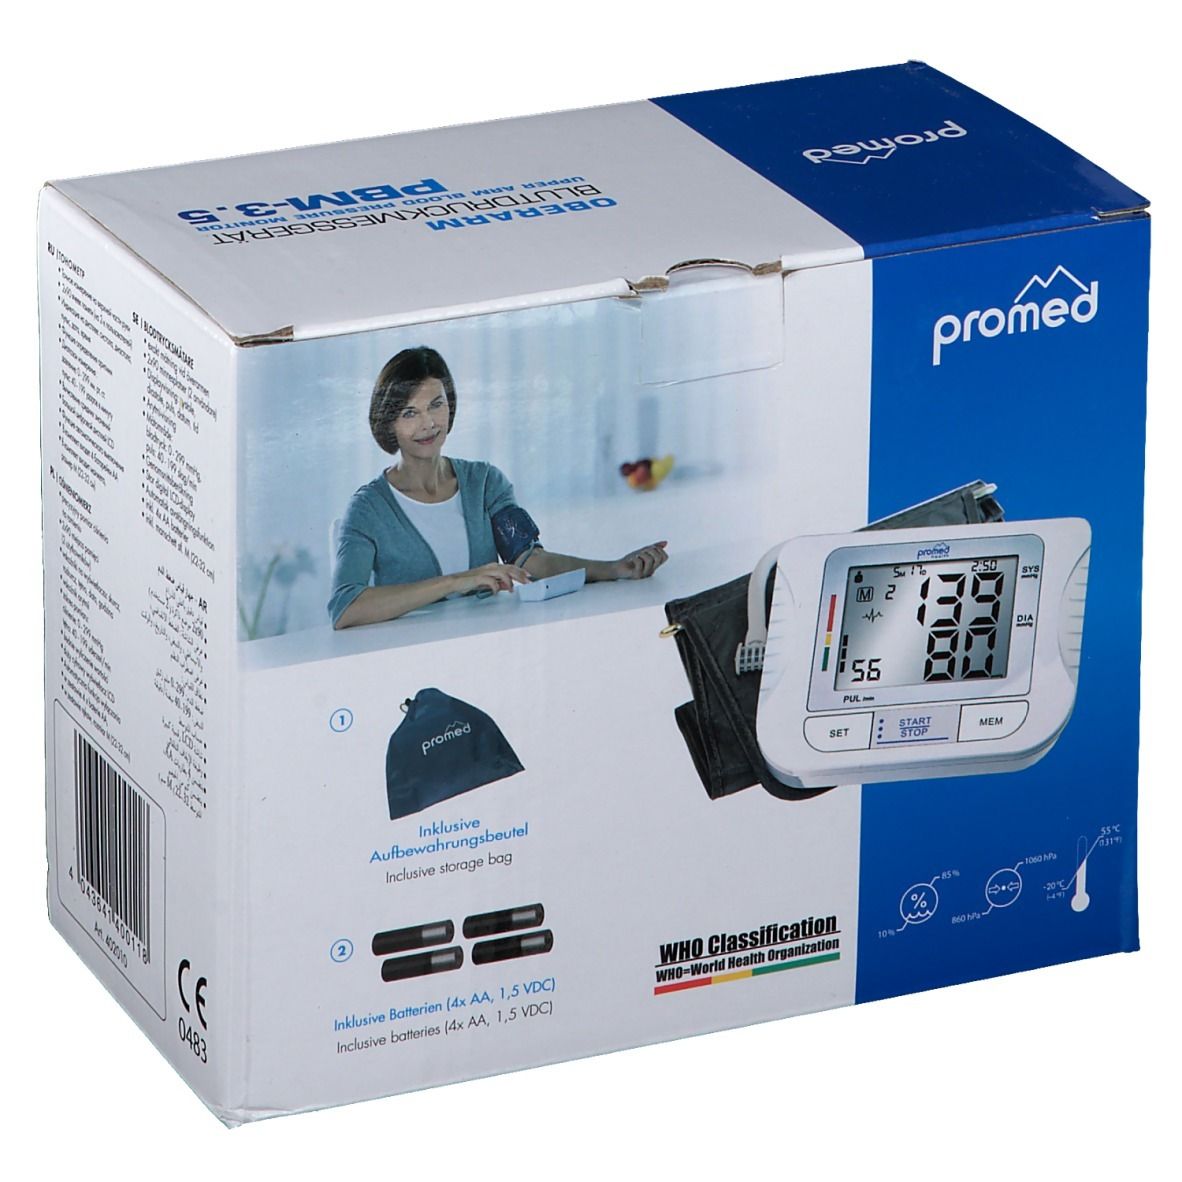 Promed Oberarm-Blutdruckmessgerät PBM-3,5